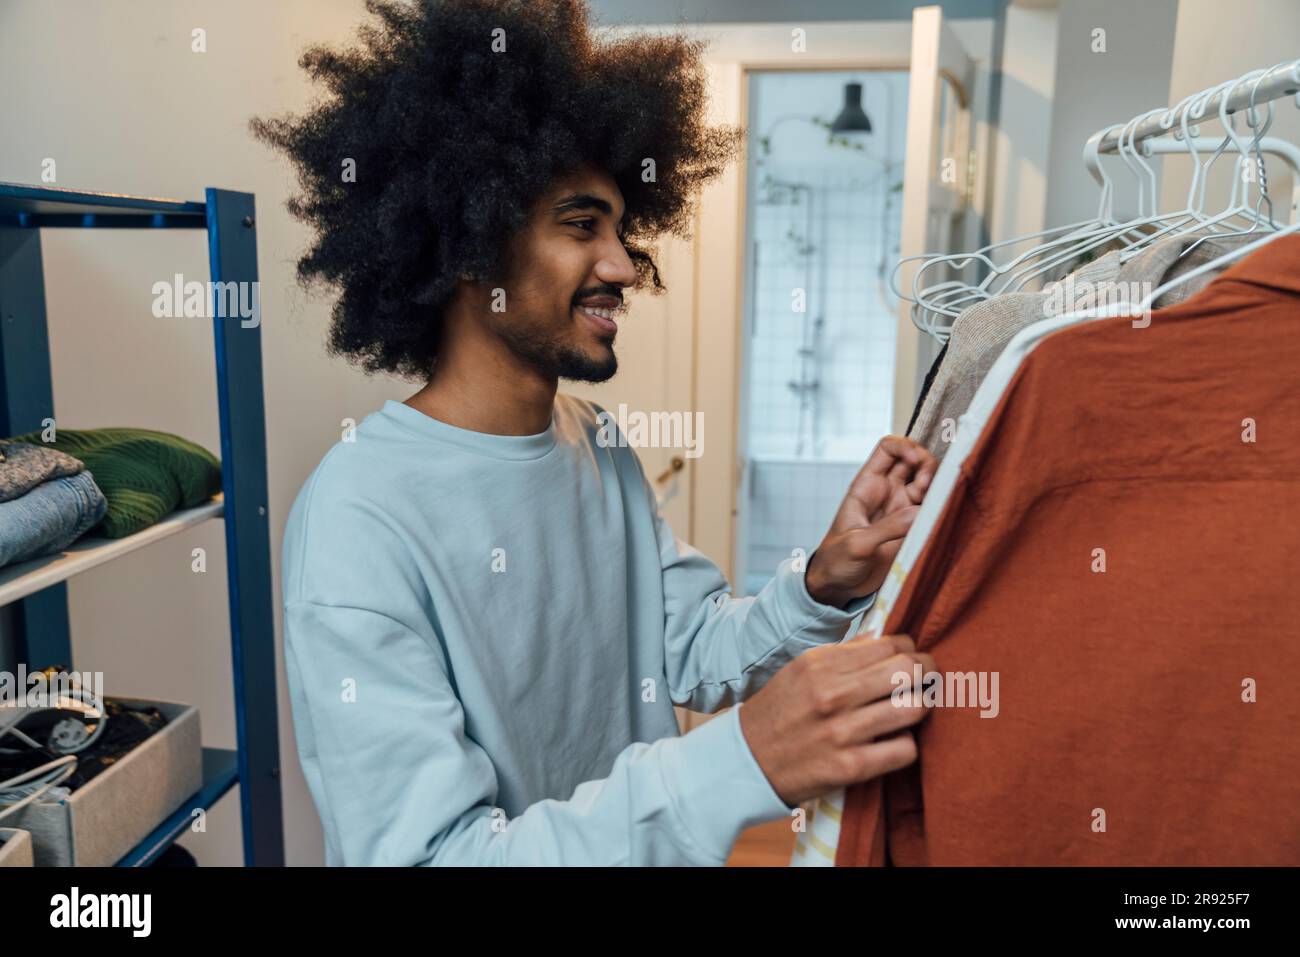 Smiling man choosing clothes at home Stock Photo